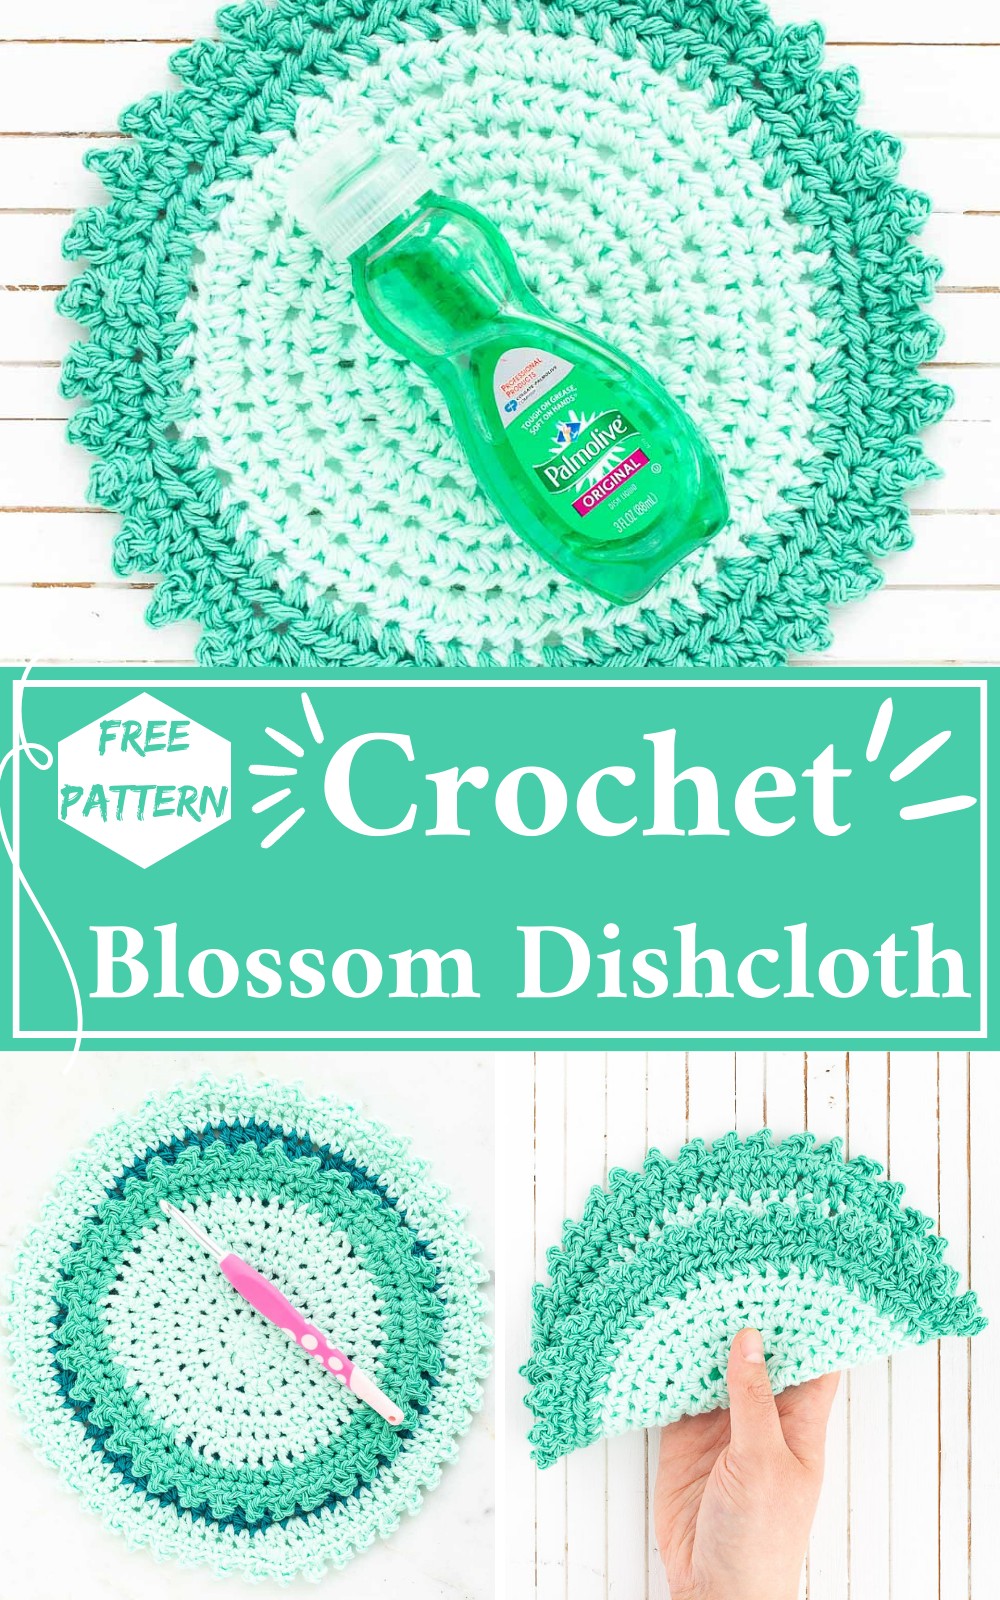 Blossom Dishcloth